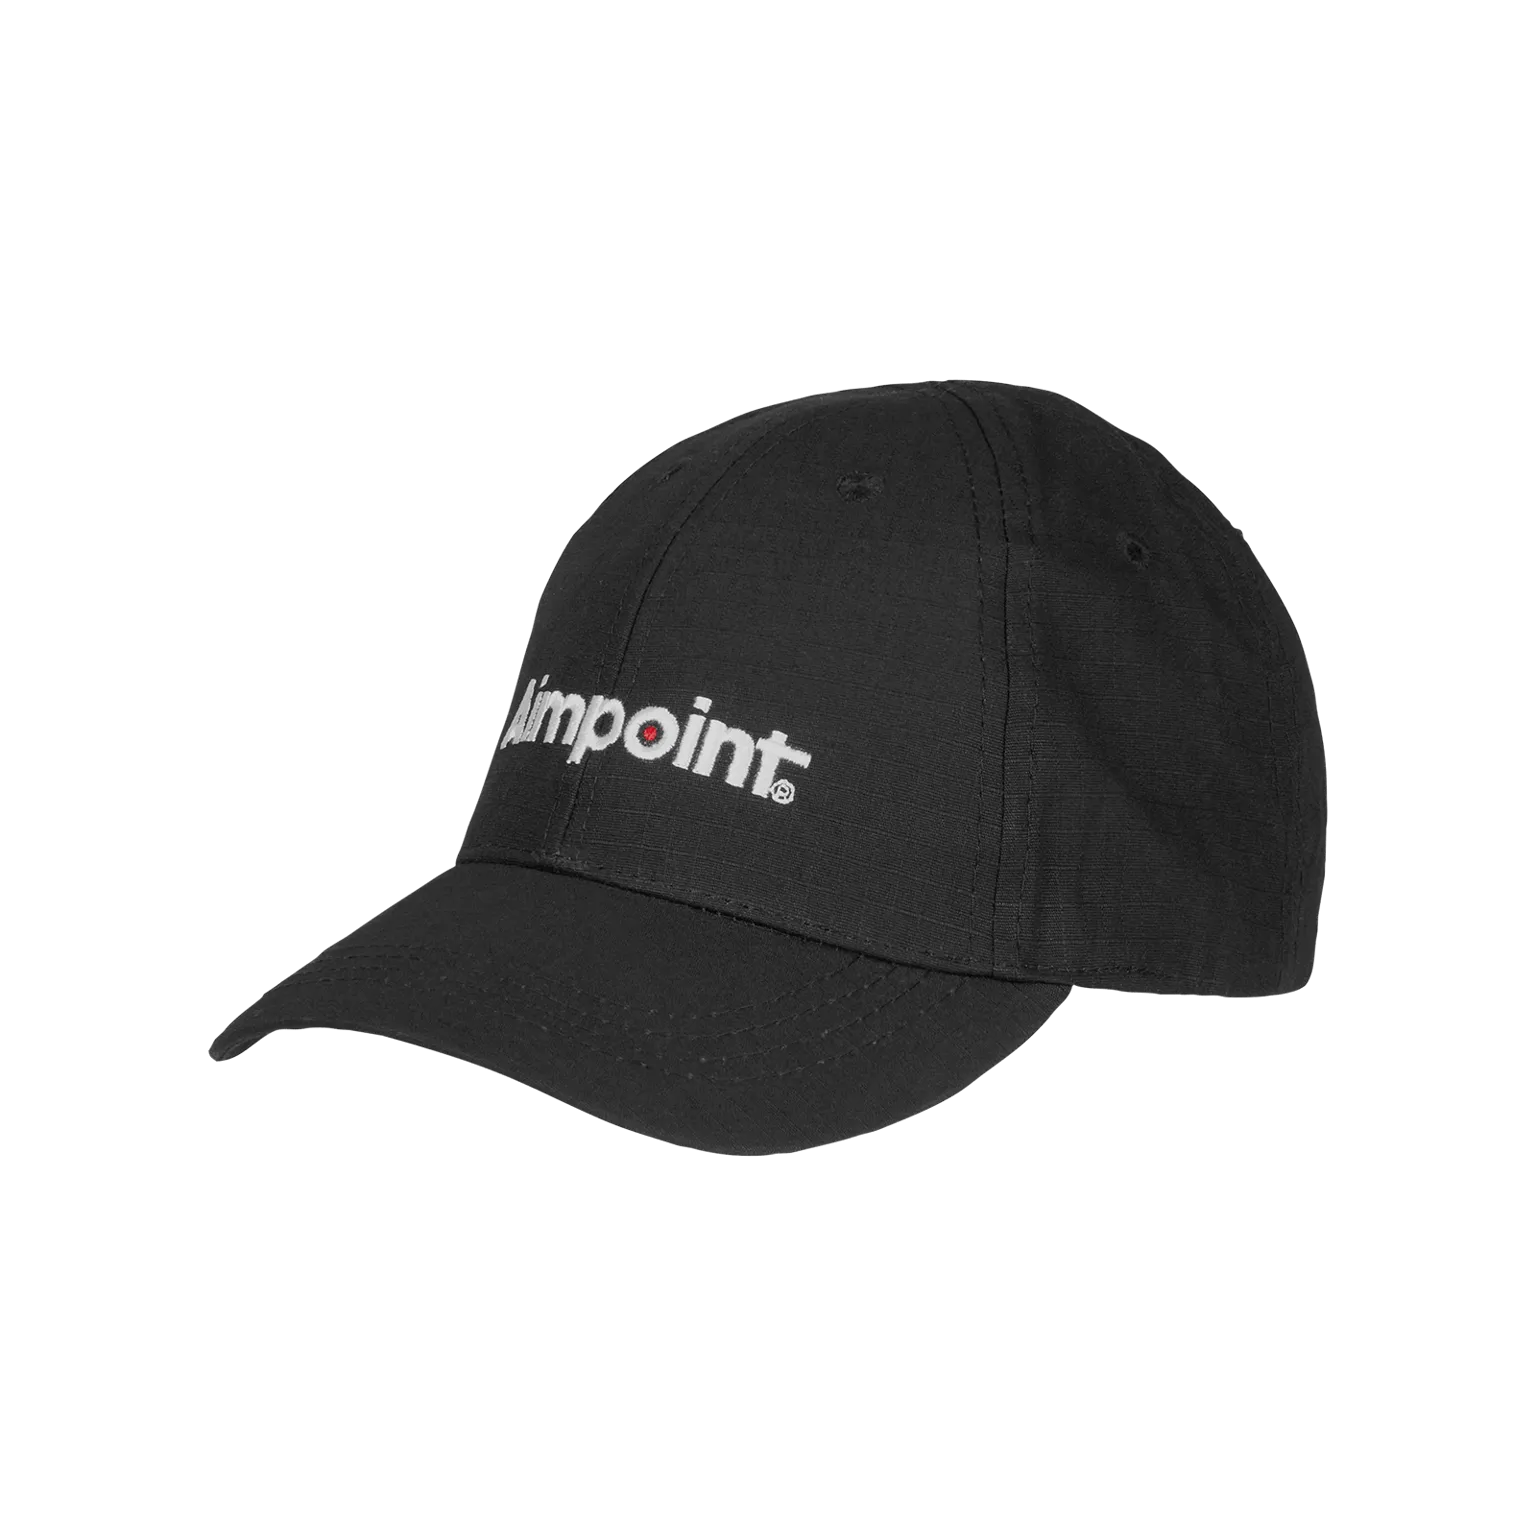 Aimpoint® Kappe - Schwarz Leichte Kappe  - 1